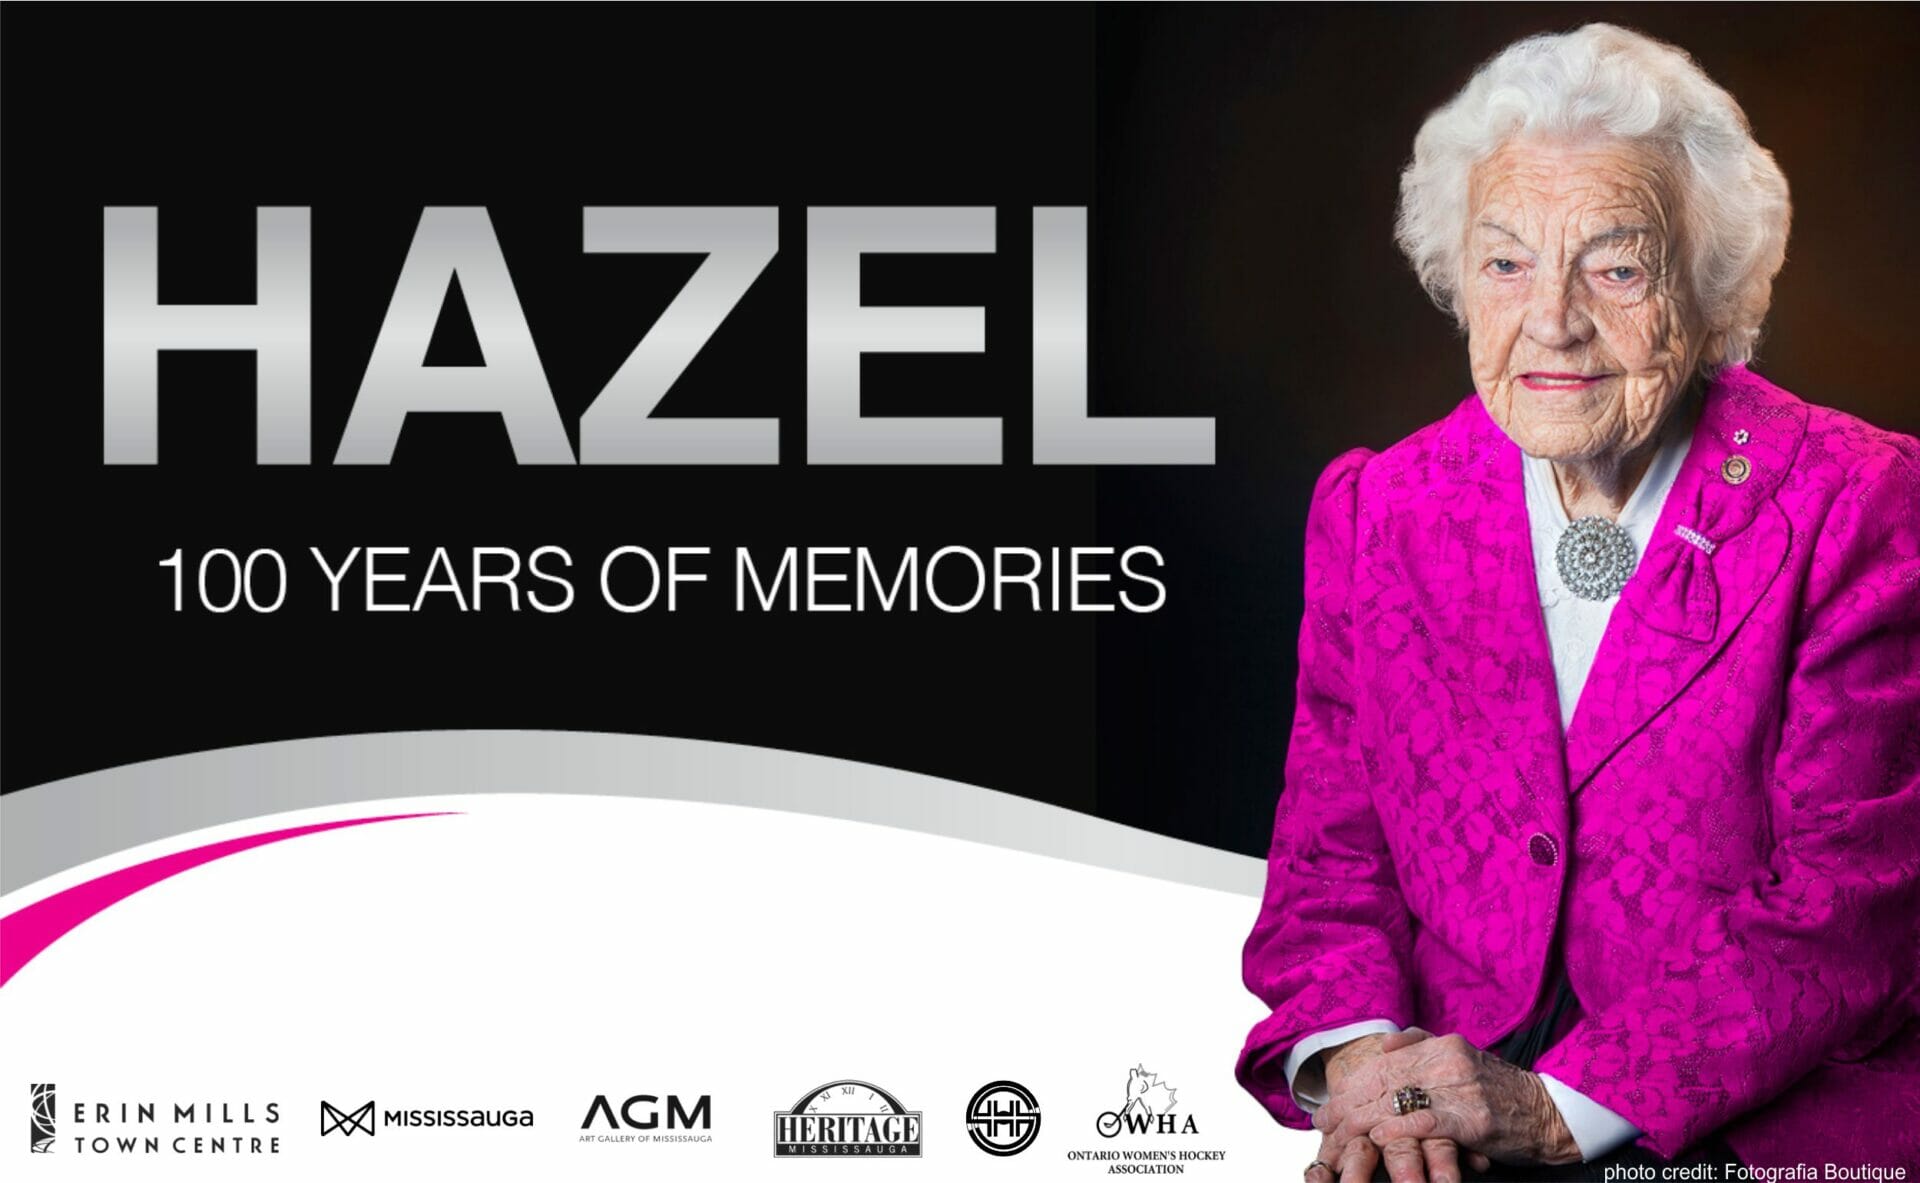 Hazel 100 Years of Memories Google image from https://www.artgalleryofmississauga.com/hazel-100-years-exhibit/